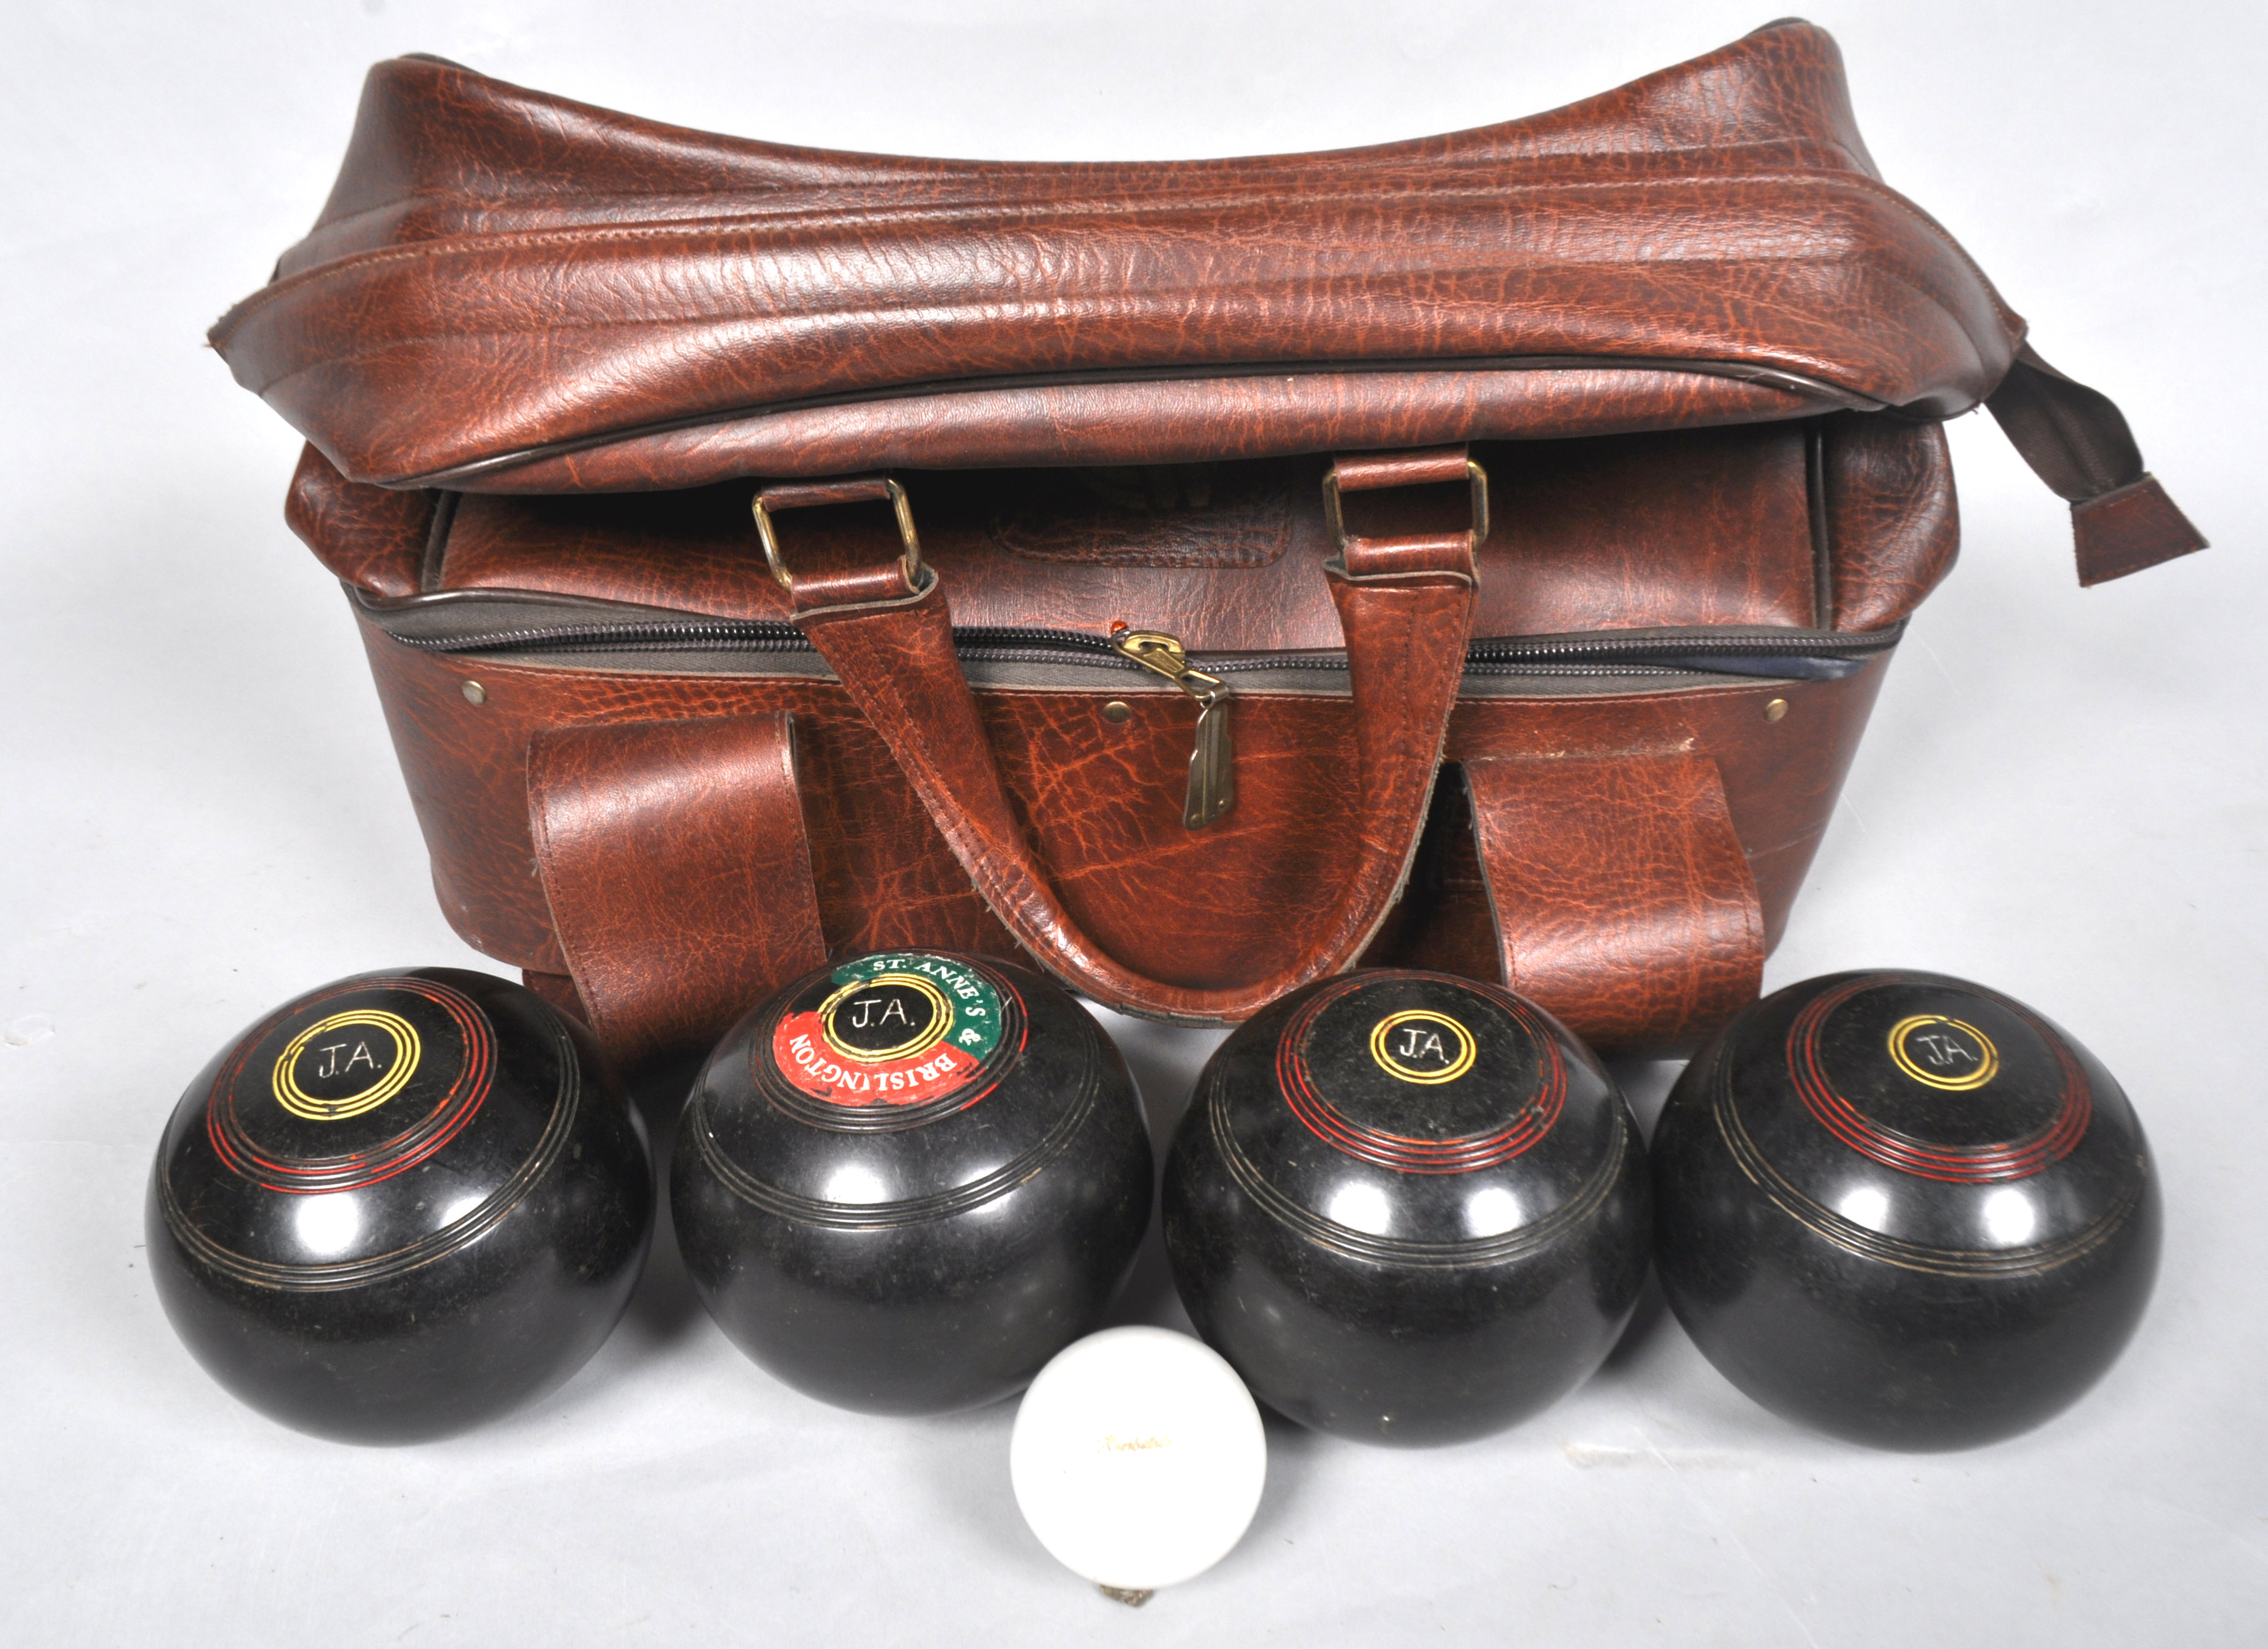 Four bowling balls in bag